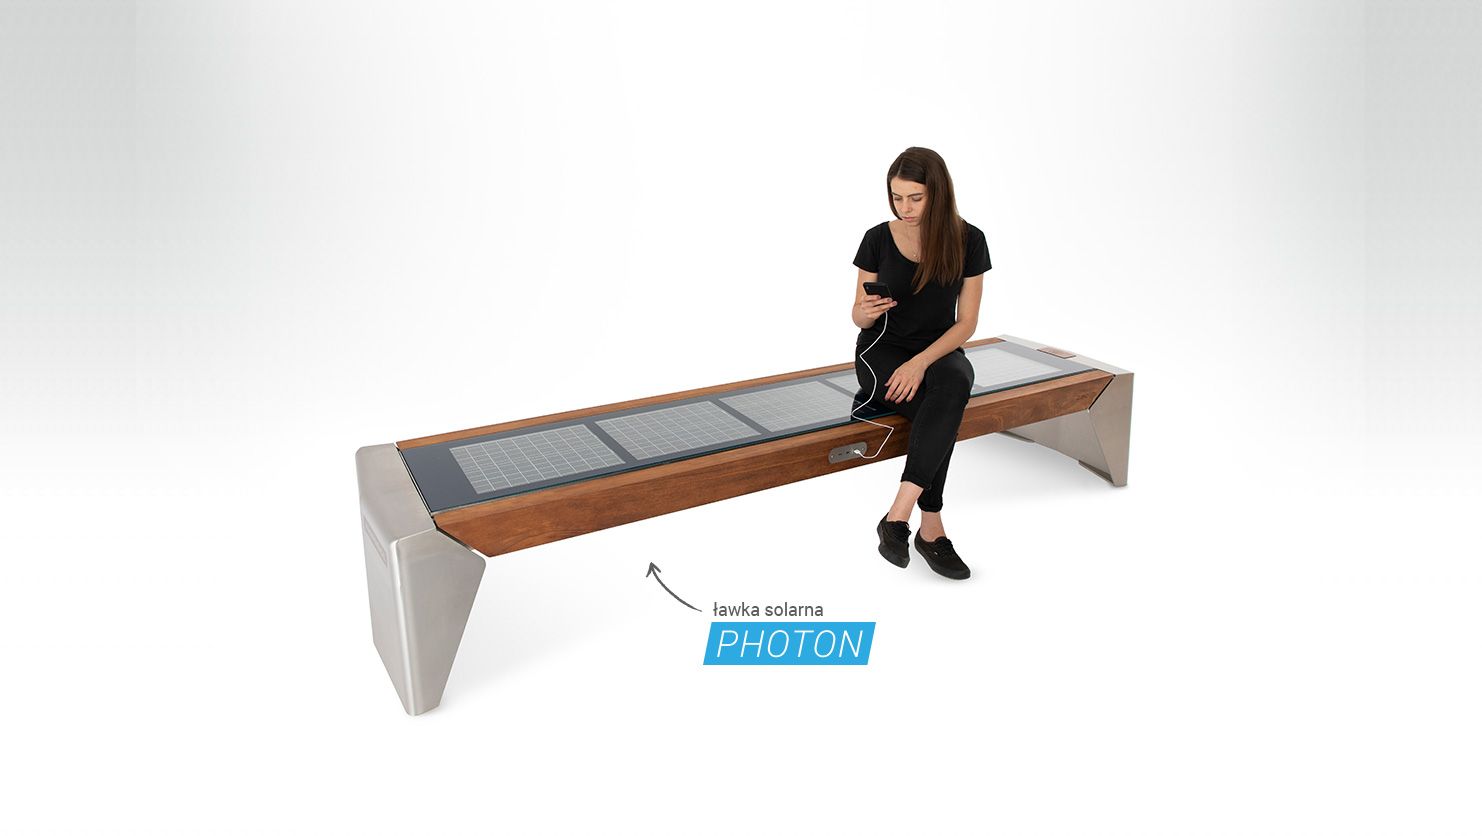 Photon è una moderna panchina cittadina alimentata da pannelli fotovoltaici dotata di ricarica rapida USB 3.0, caricatore induttivo, Wi-Fi, loop a induzione, pannello di altoparlanti e suoni e illuminazione a LED.